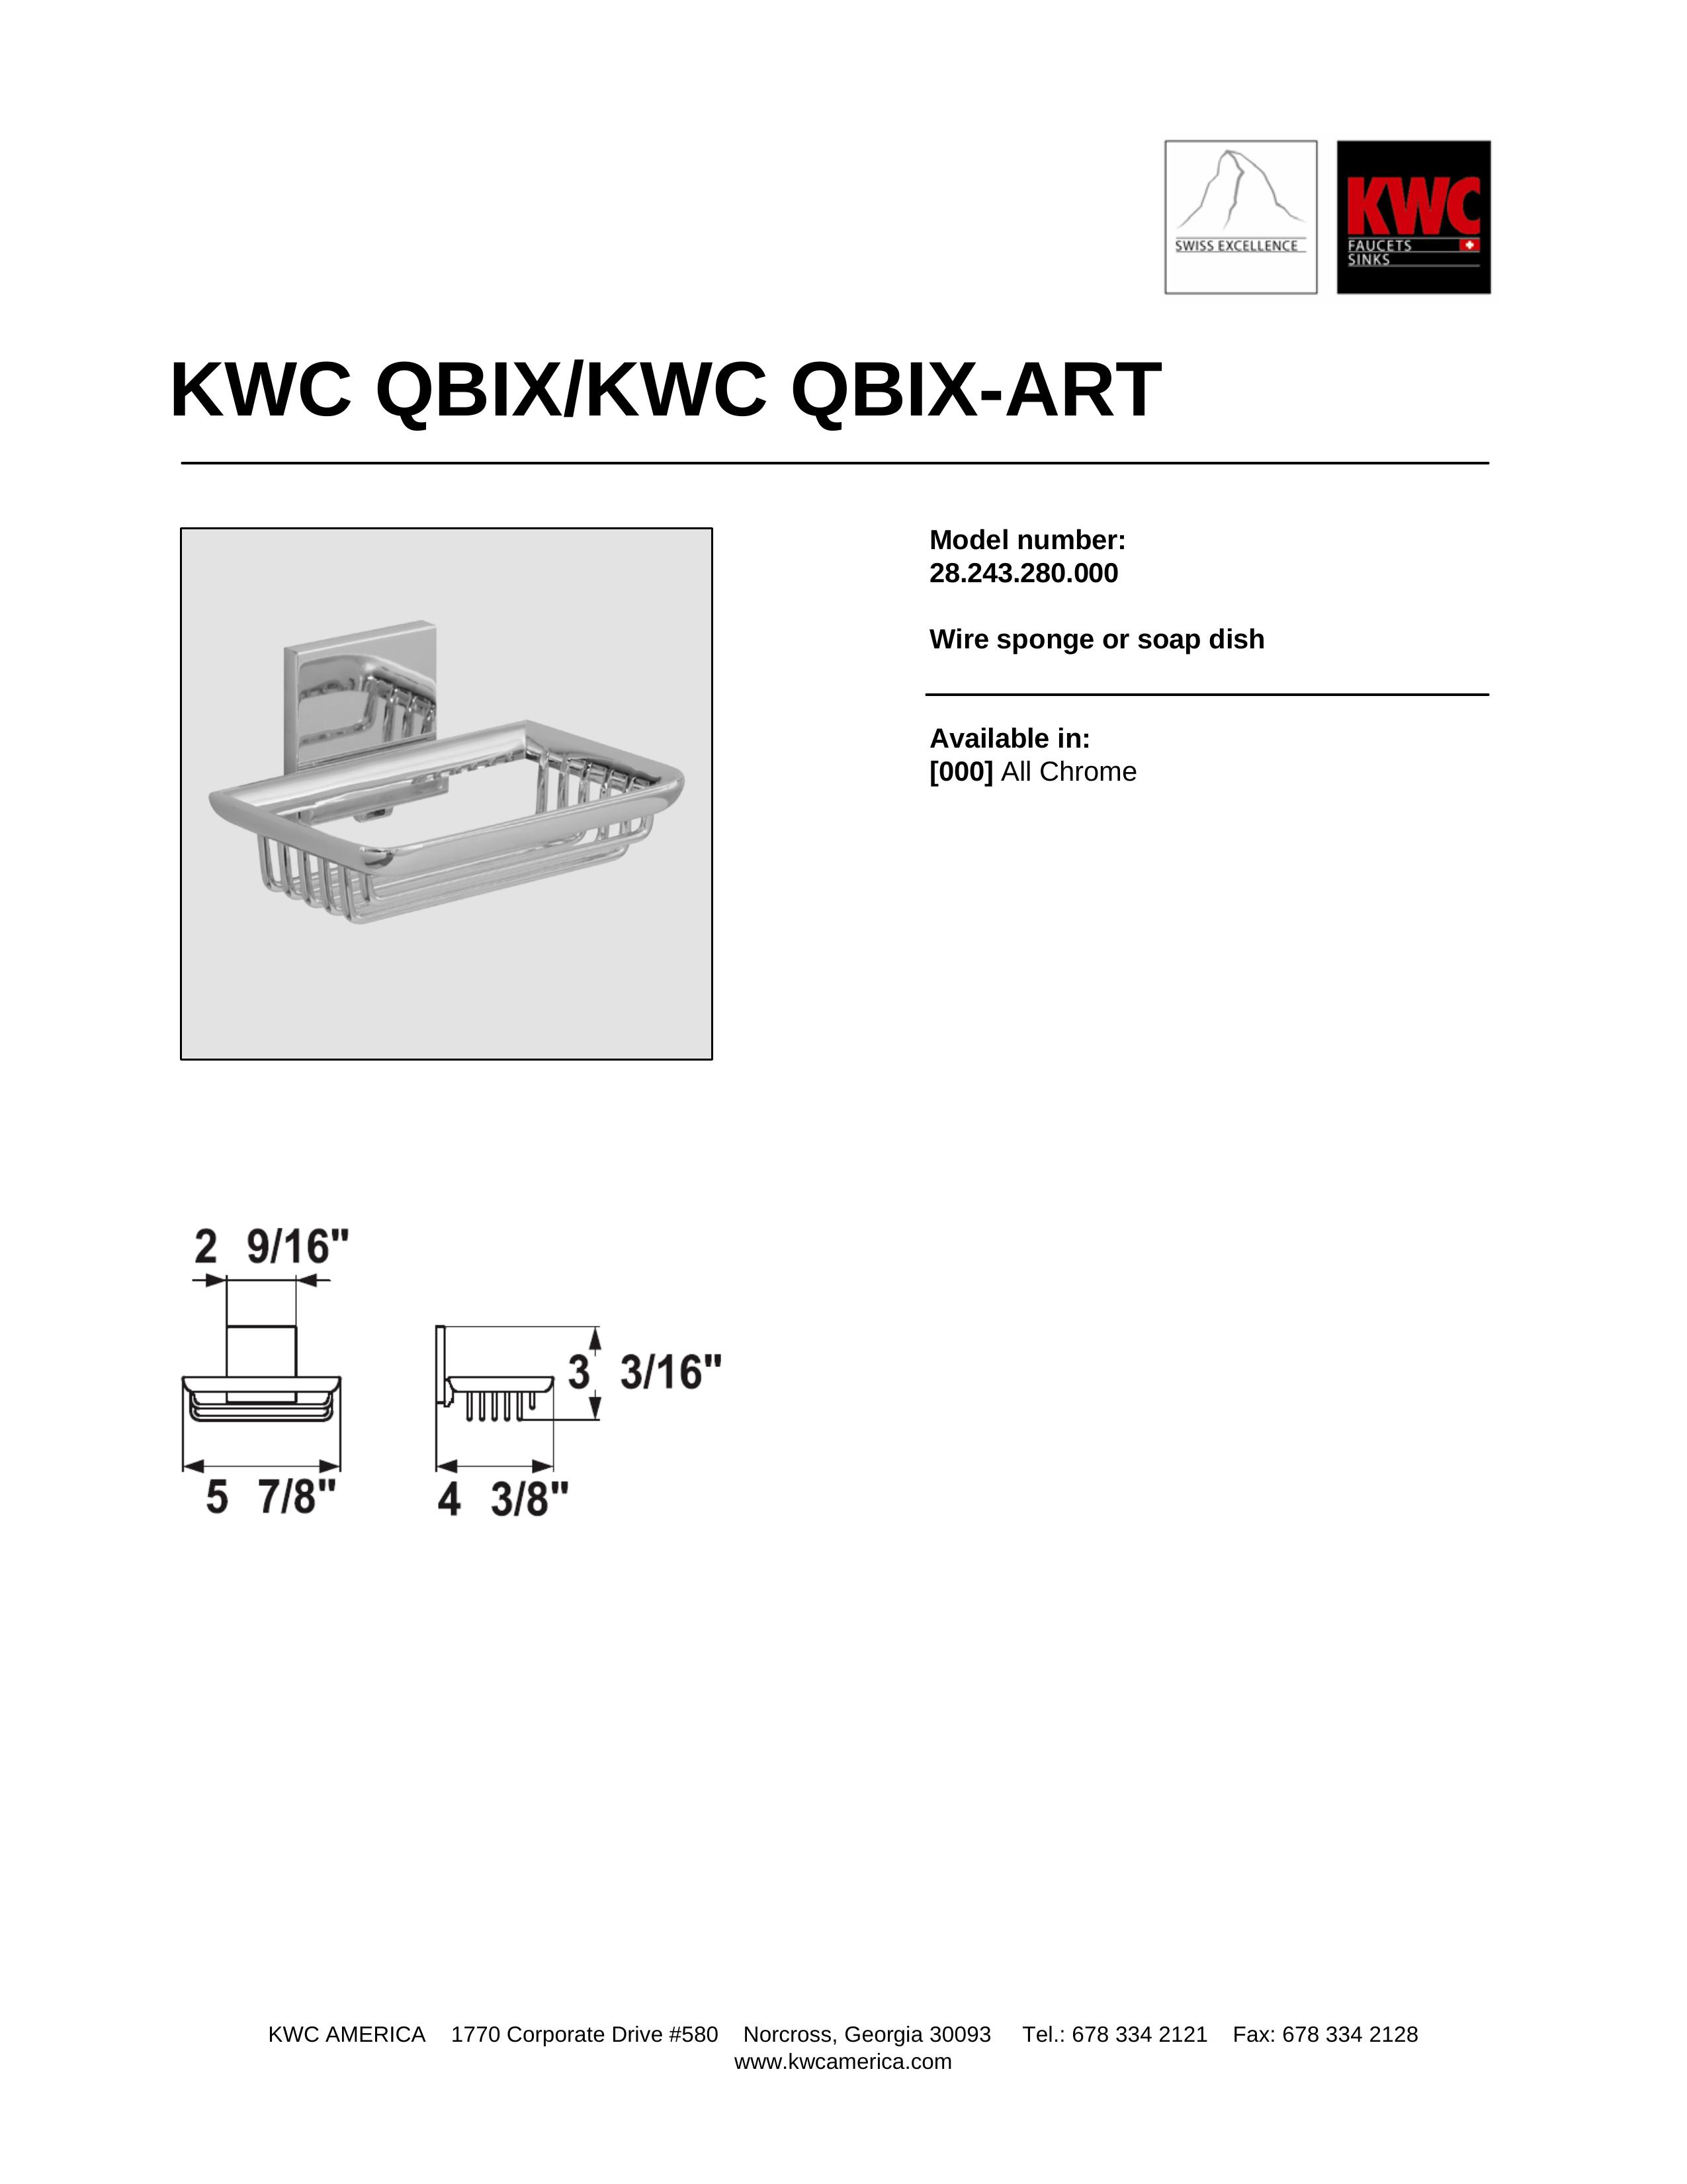 KWC 28.243.280.000 Outdoor Shower User Manual